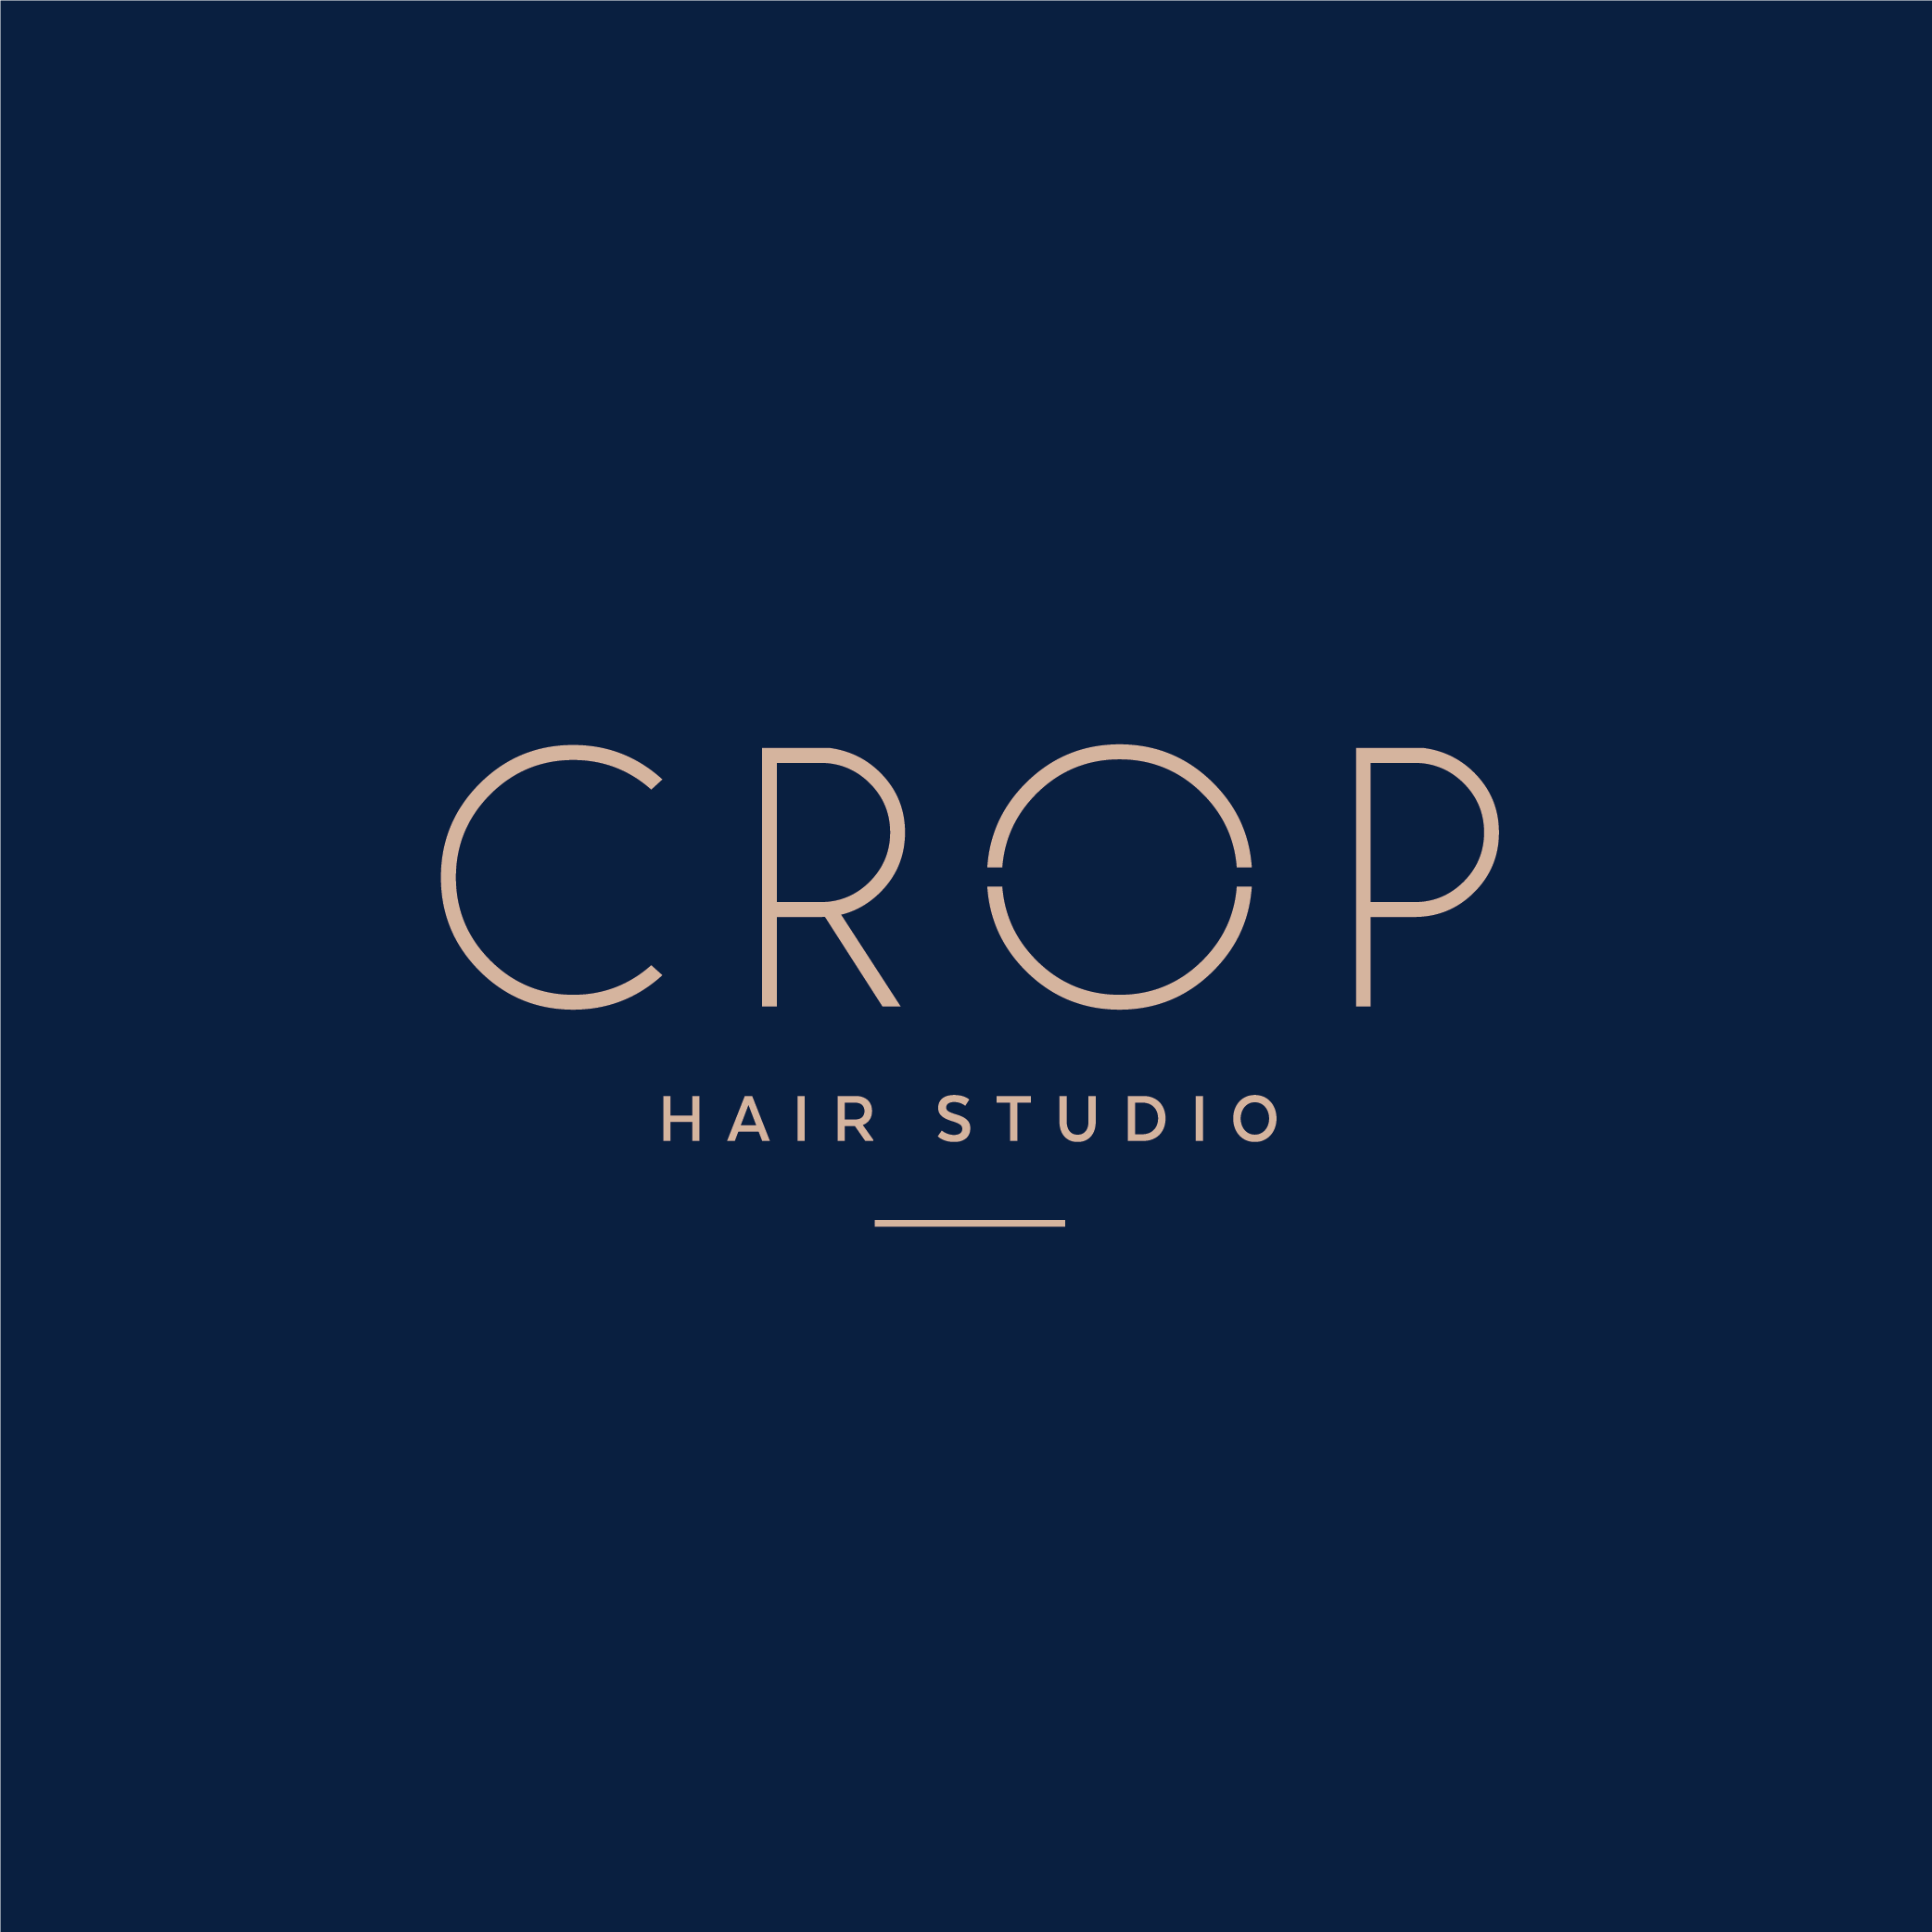 Crop Hair Studio